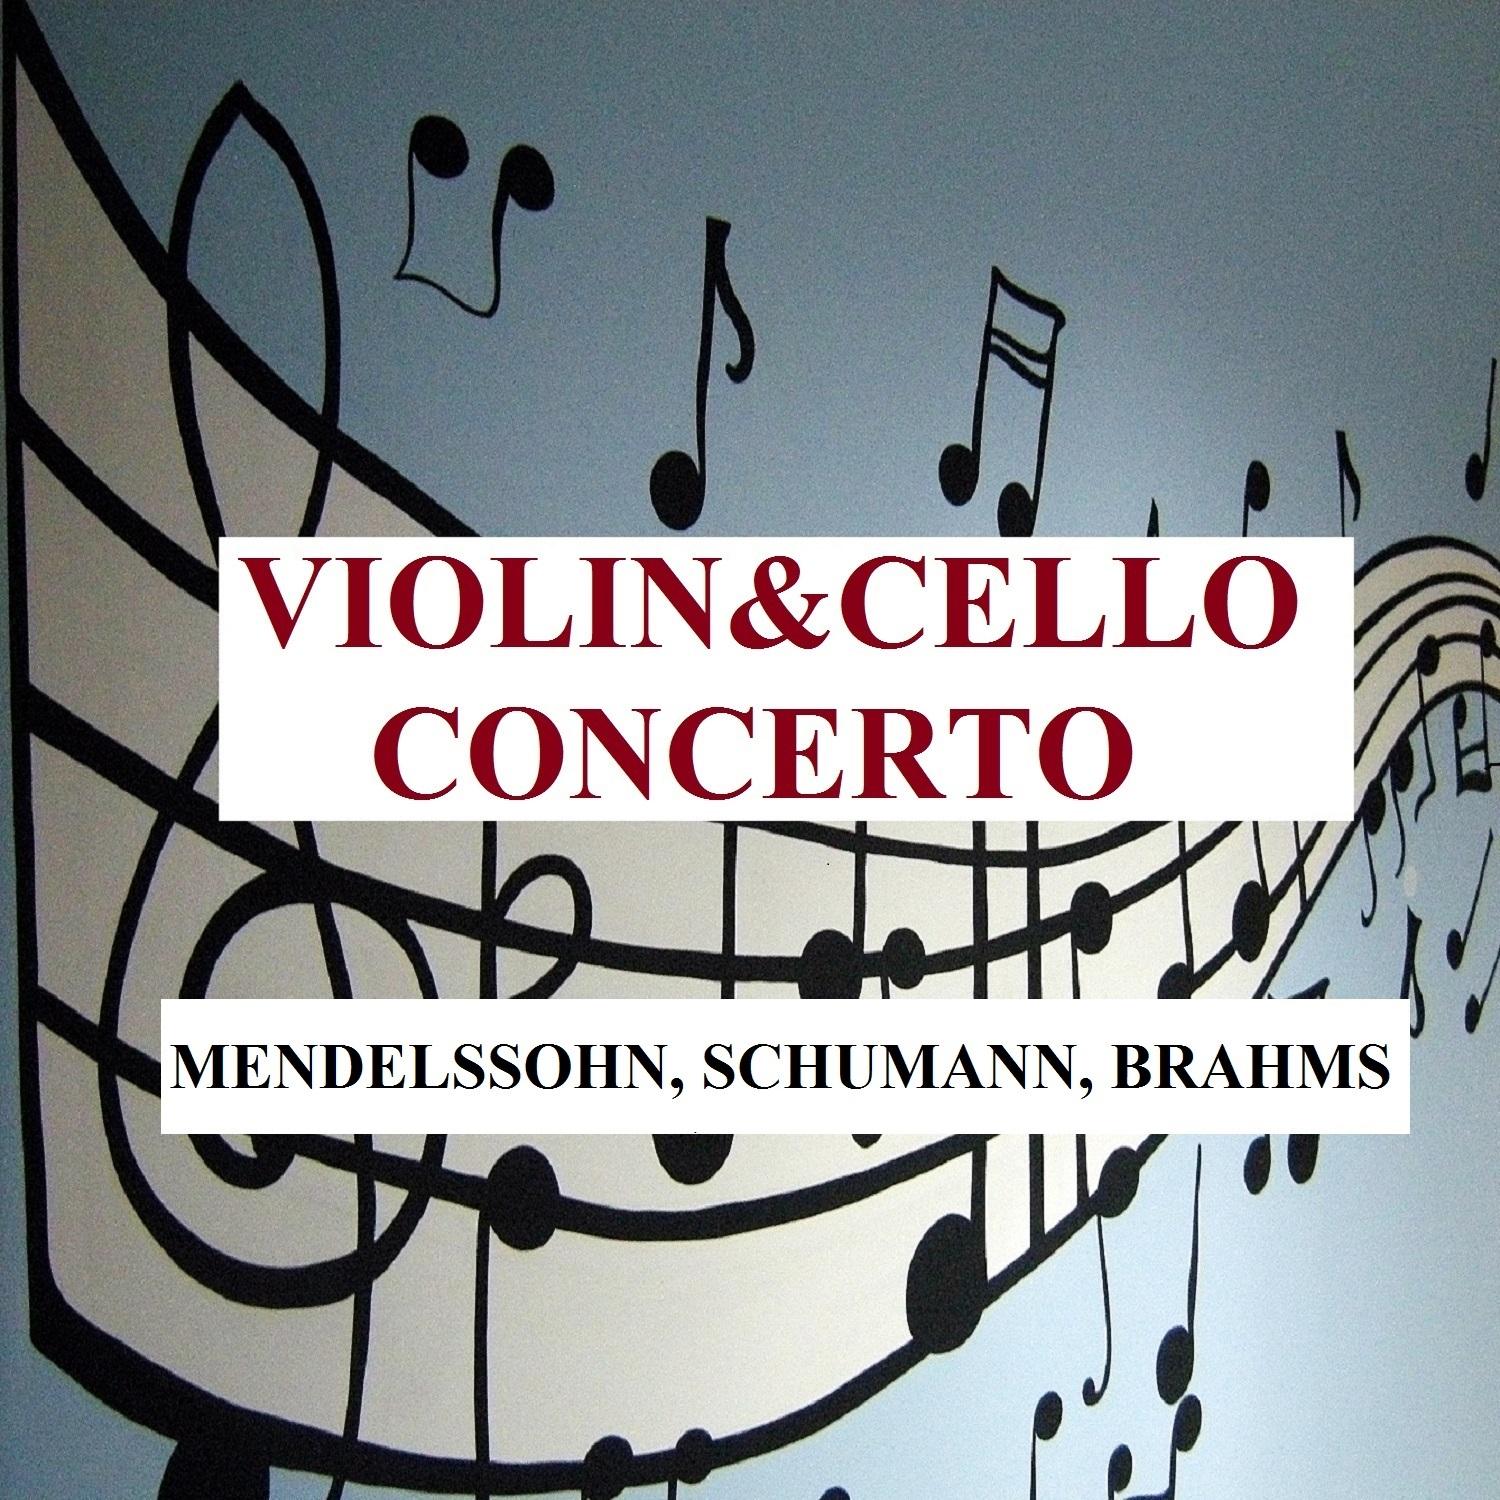 Violin&Cello Concerto - Mendelssohn, Schumann, Brahms